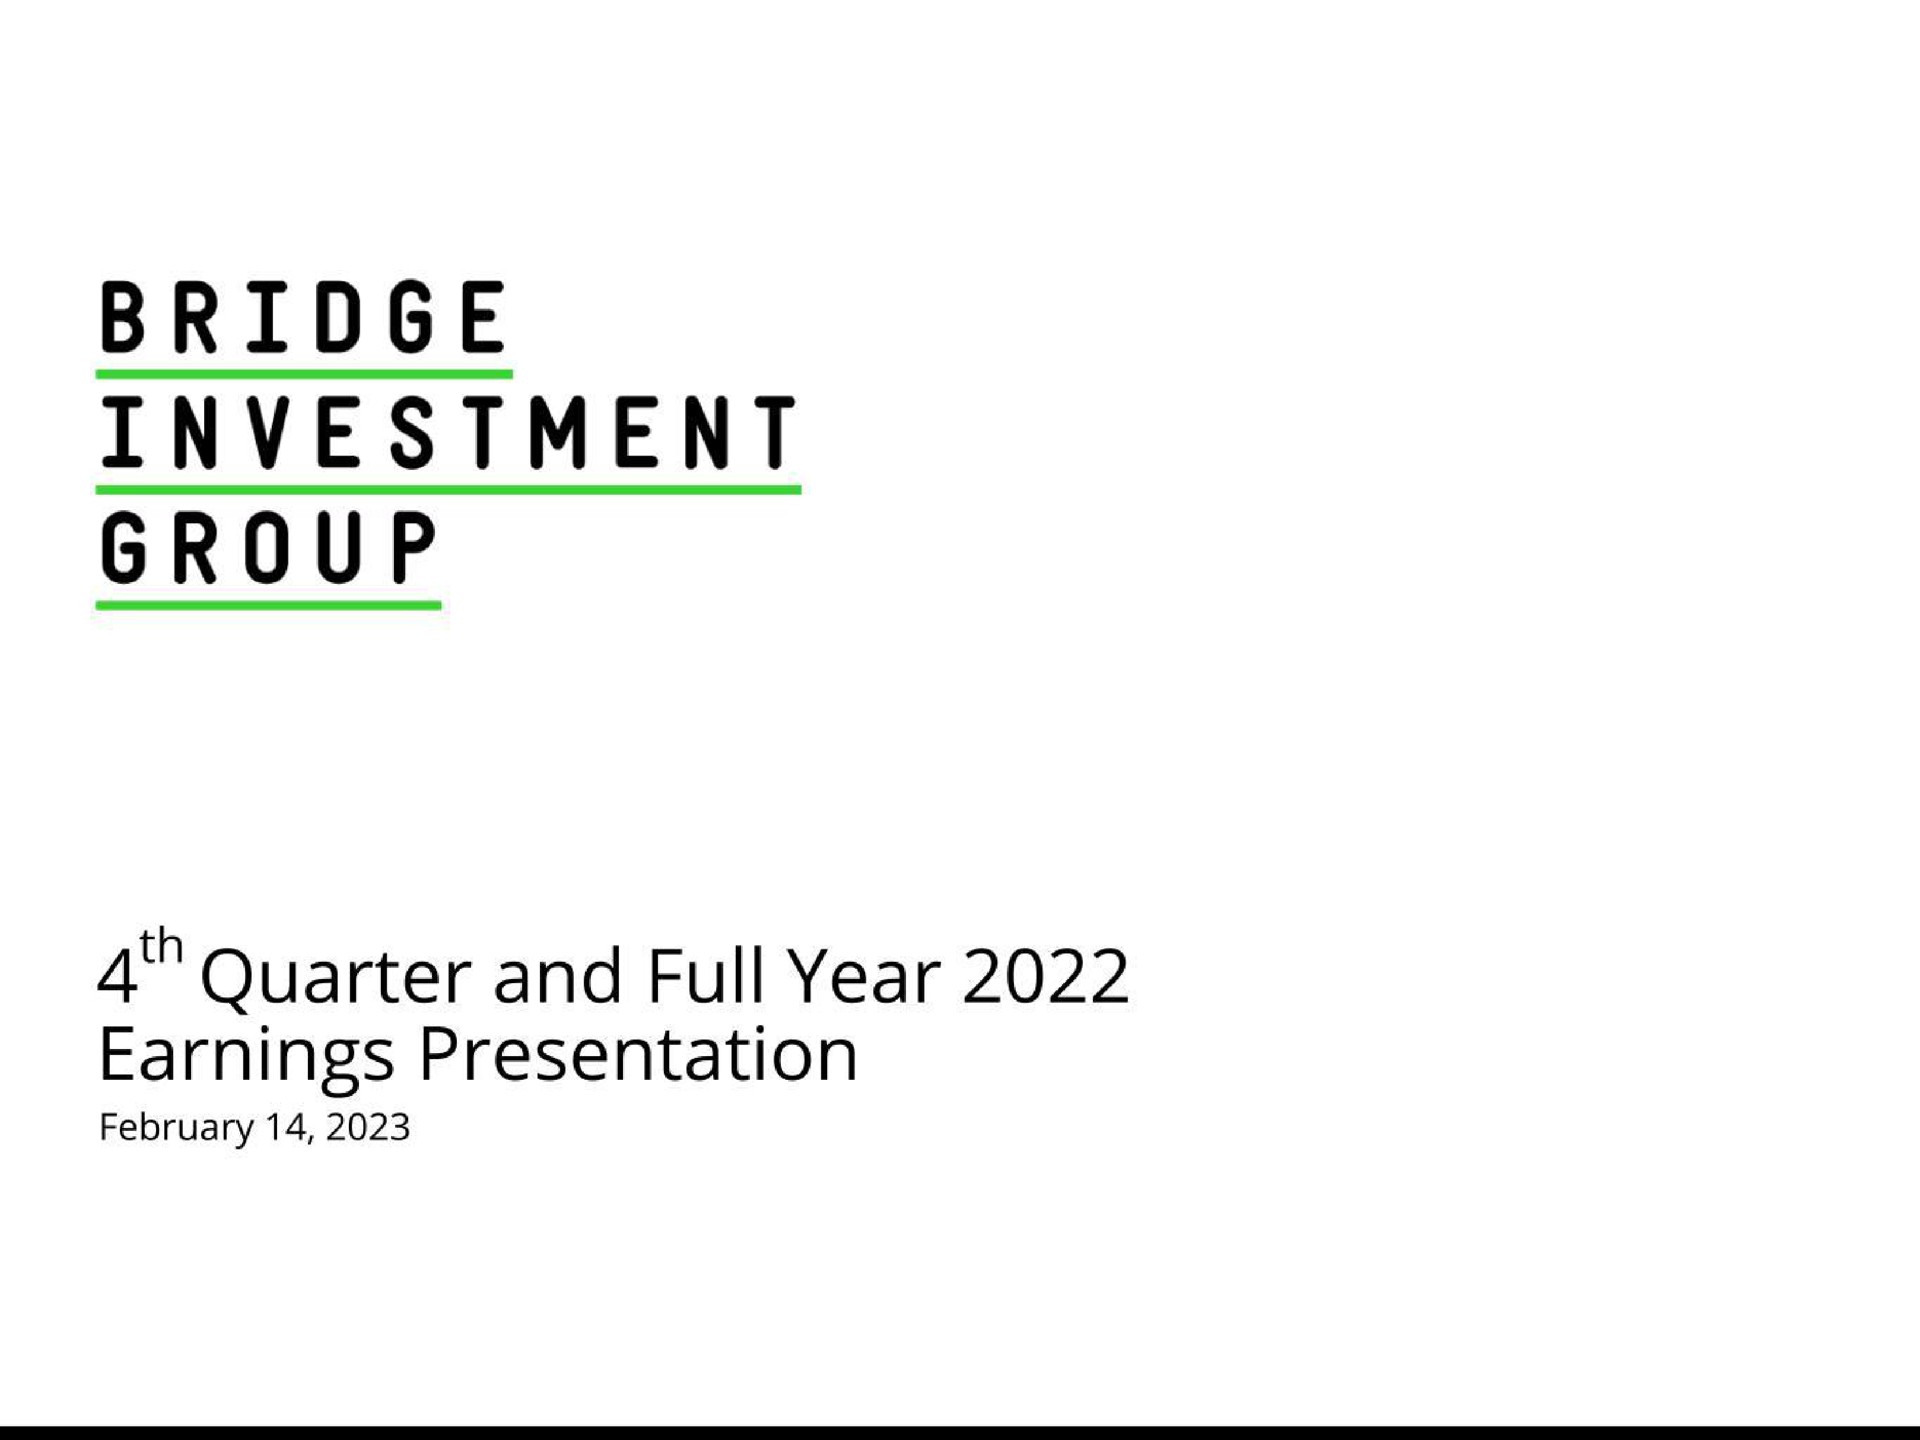 bridge investment group quarter and full year earnings presentation | Bridge Investment Group